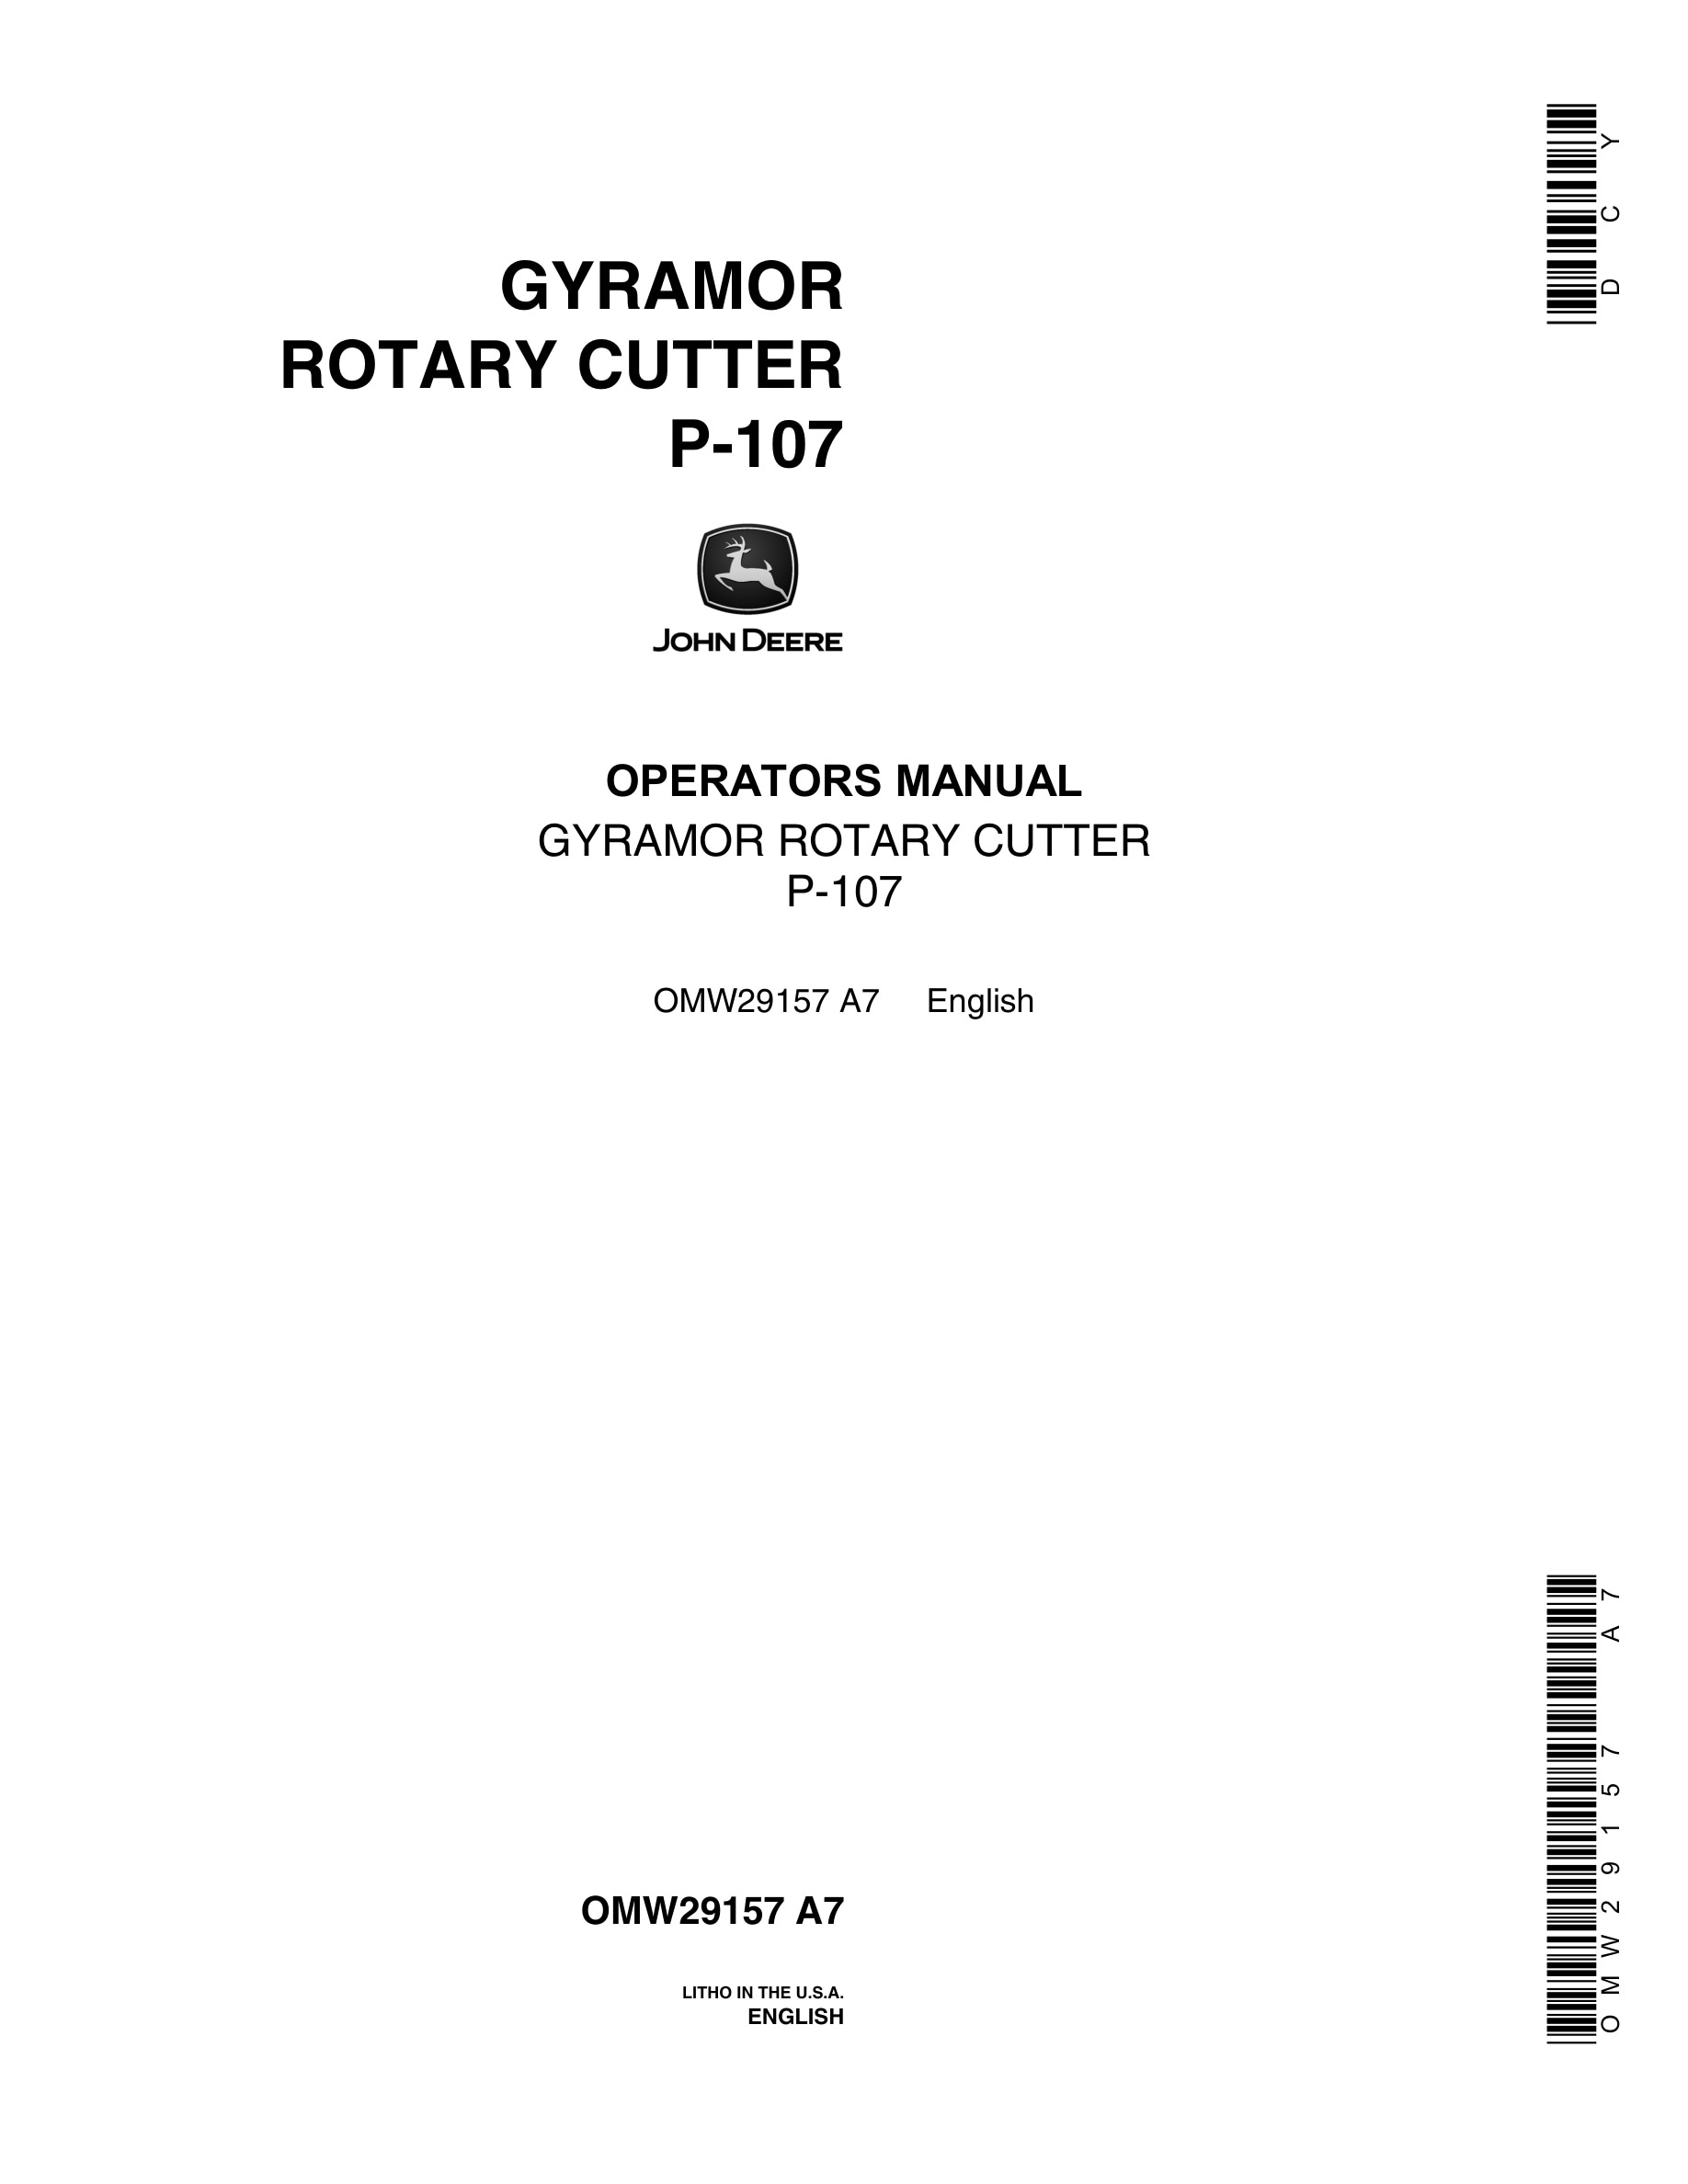 John Deere P-107 Gyramor Rotary Cutter Operator Manual OMW29157-1